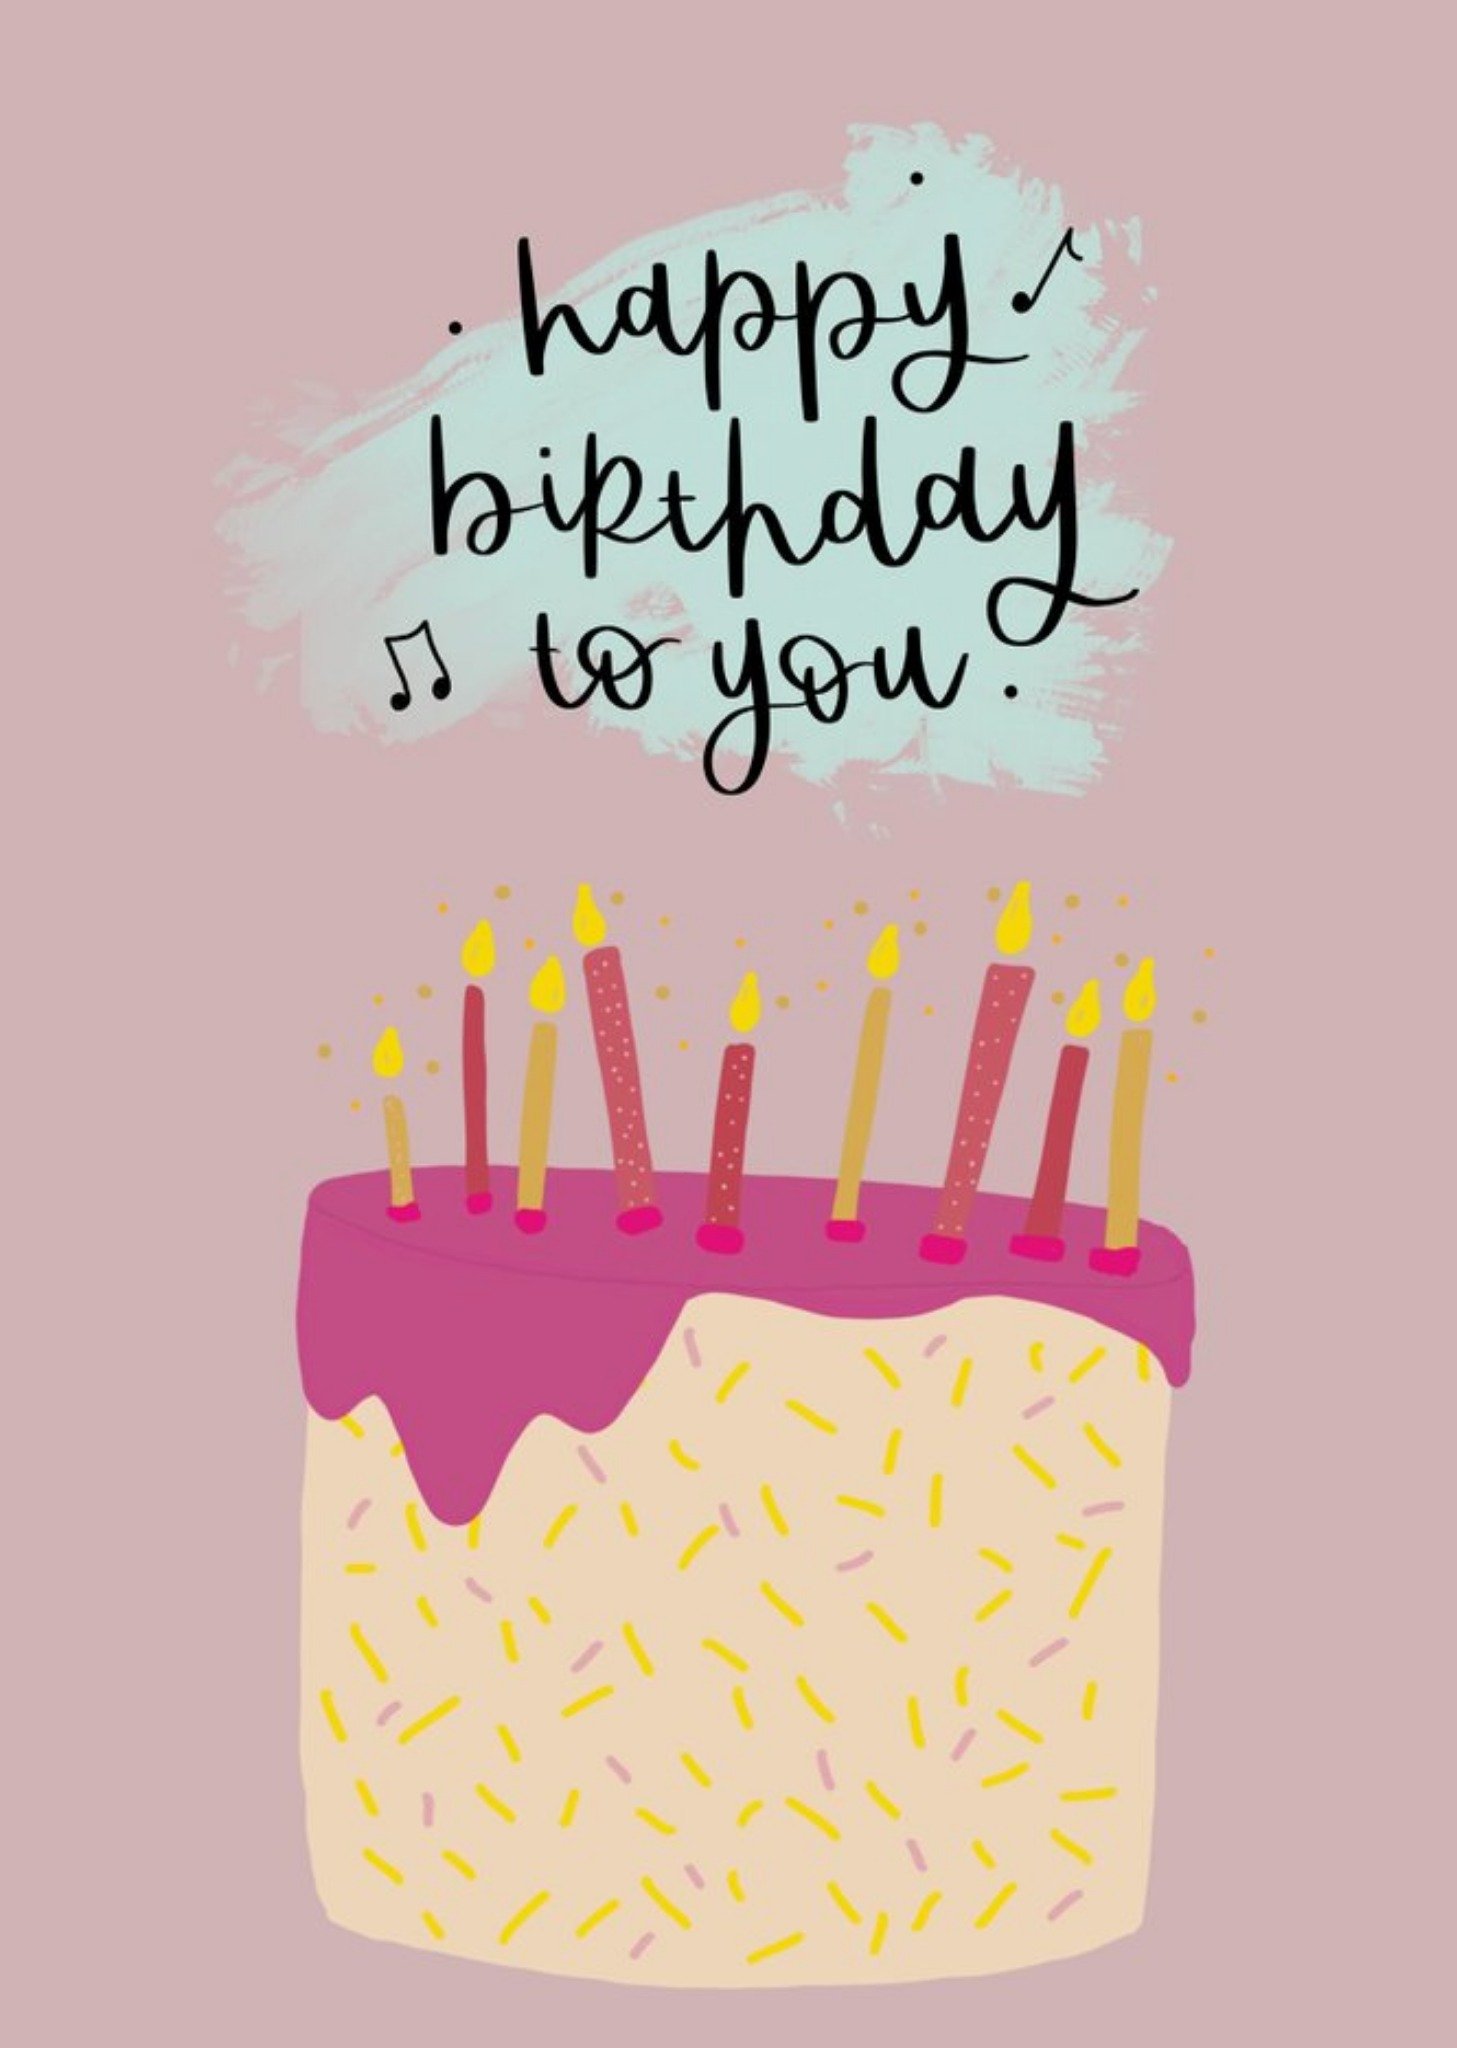 Friends The Lyons Den Illustration Pink Cake Food Grandma Birthday Card Ecard